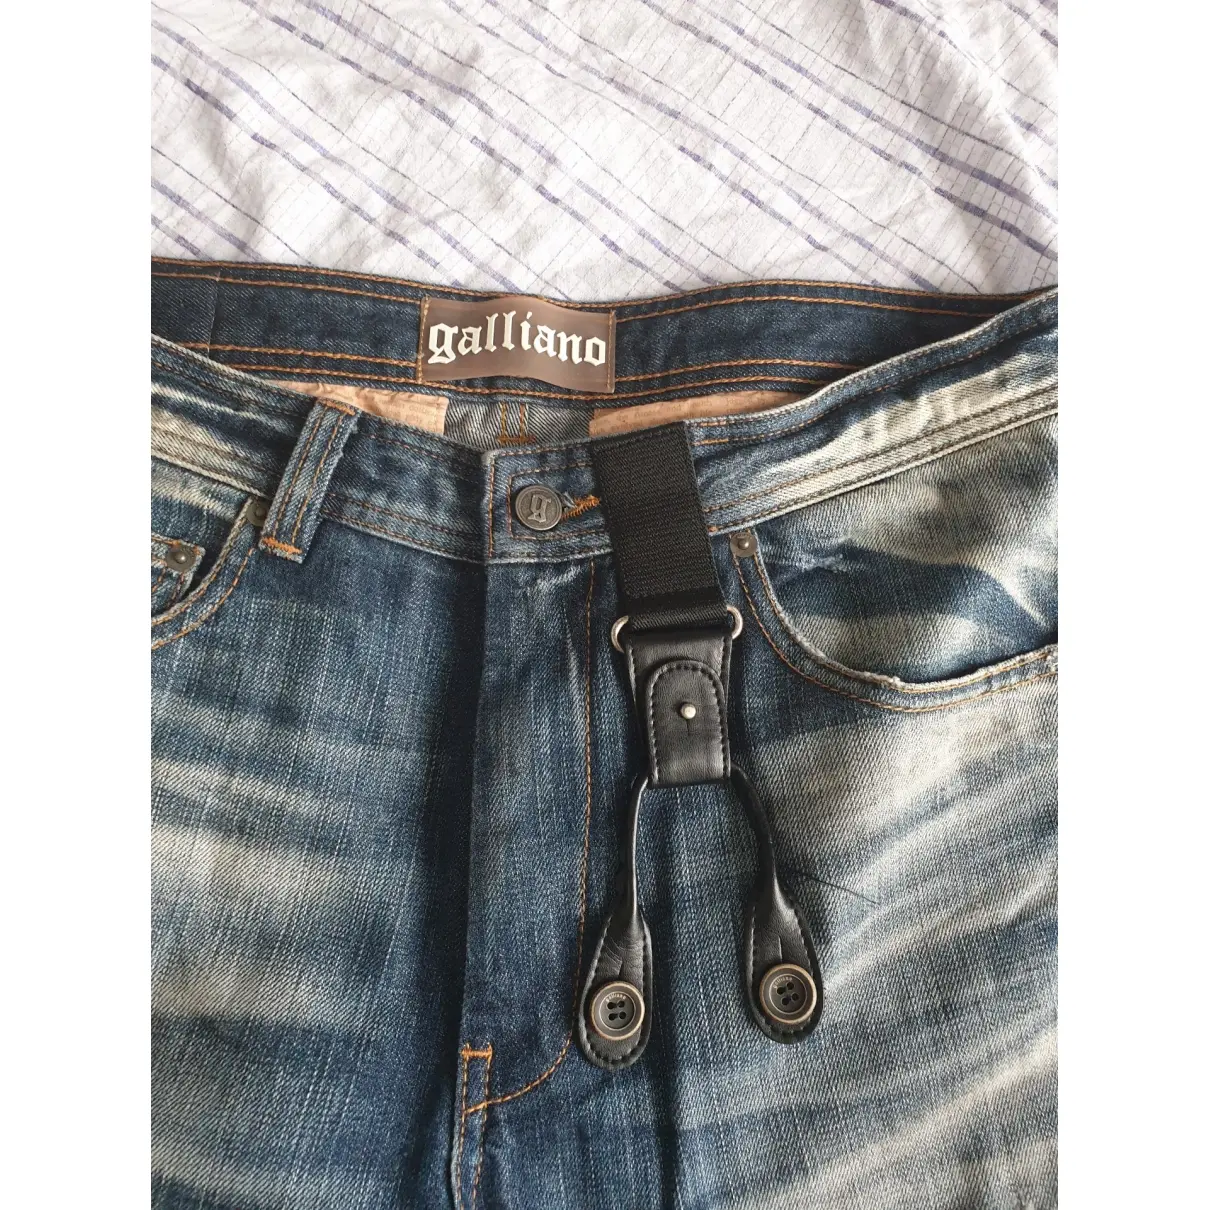 Luxury Galliano Jeans Men